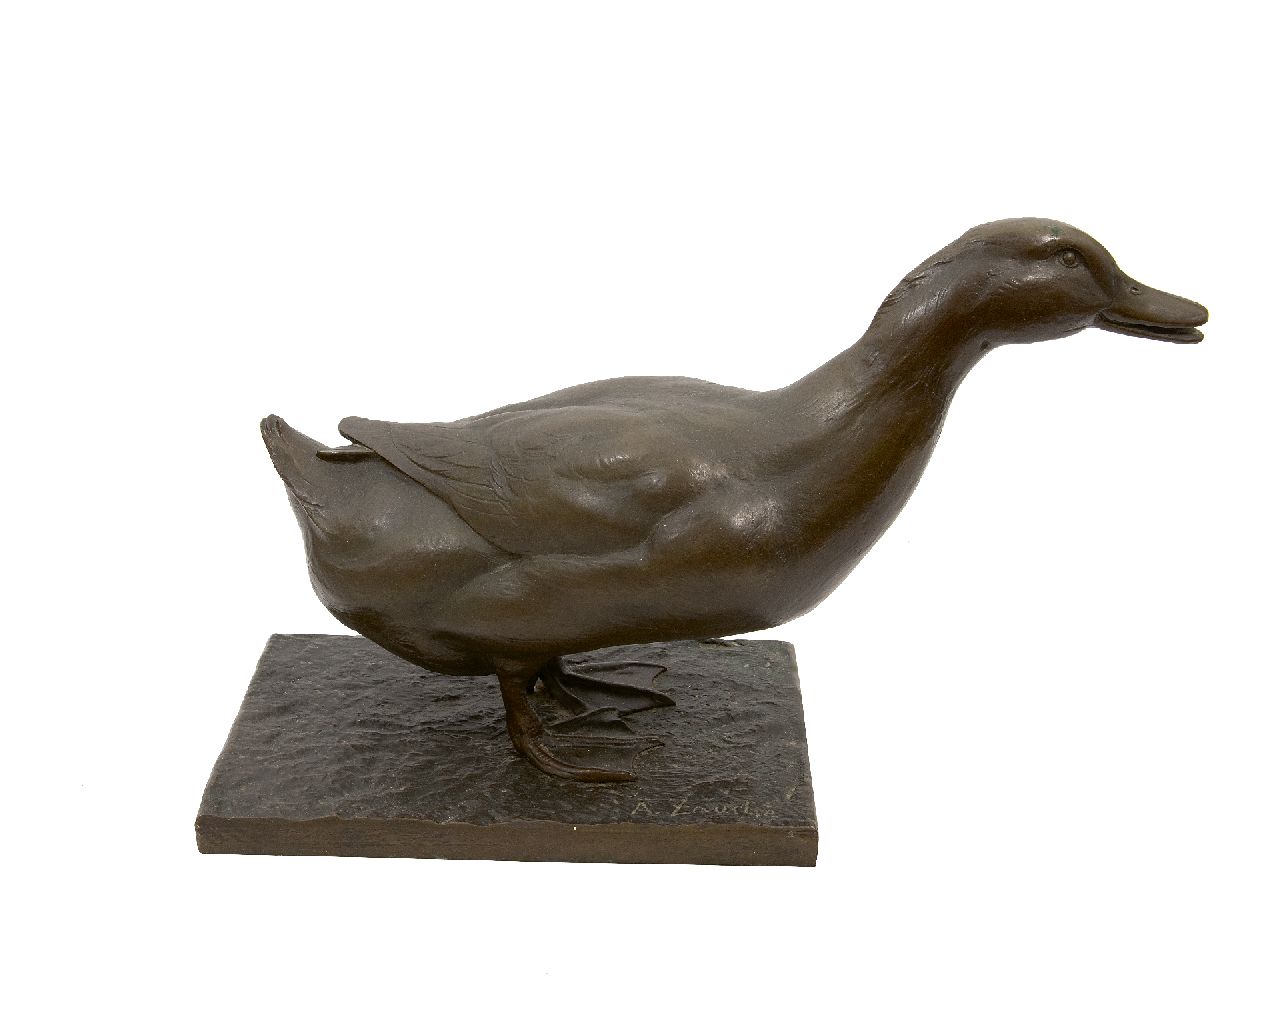 Arno 'Oswald' Zauche | Gans, brons, 39,0 x 59,0 cm, gesigneerd op basis